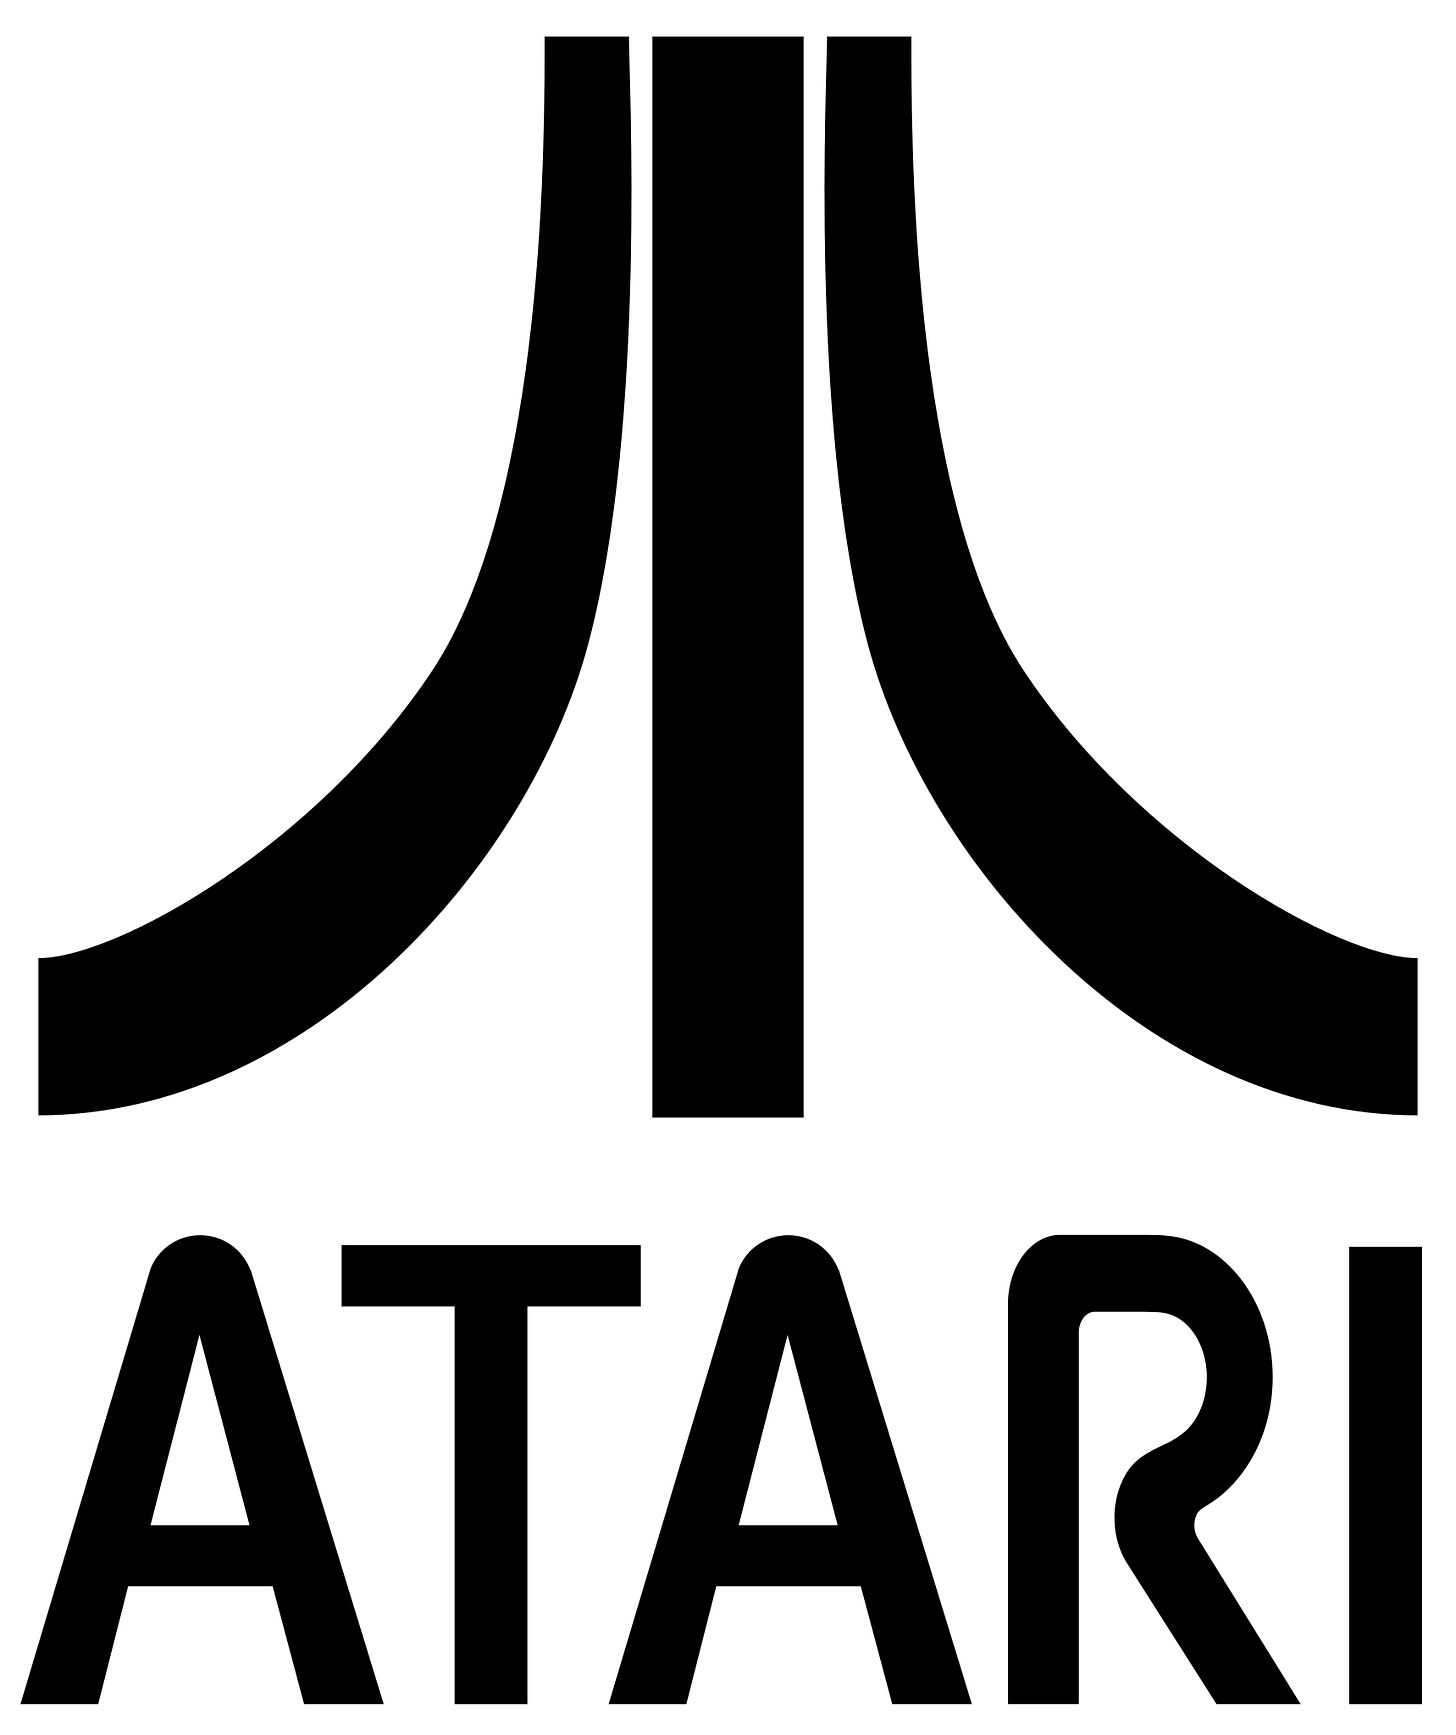 File:Atari logo alt.svg - Wikipedia